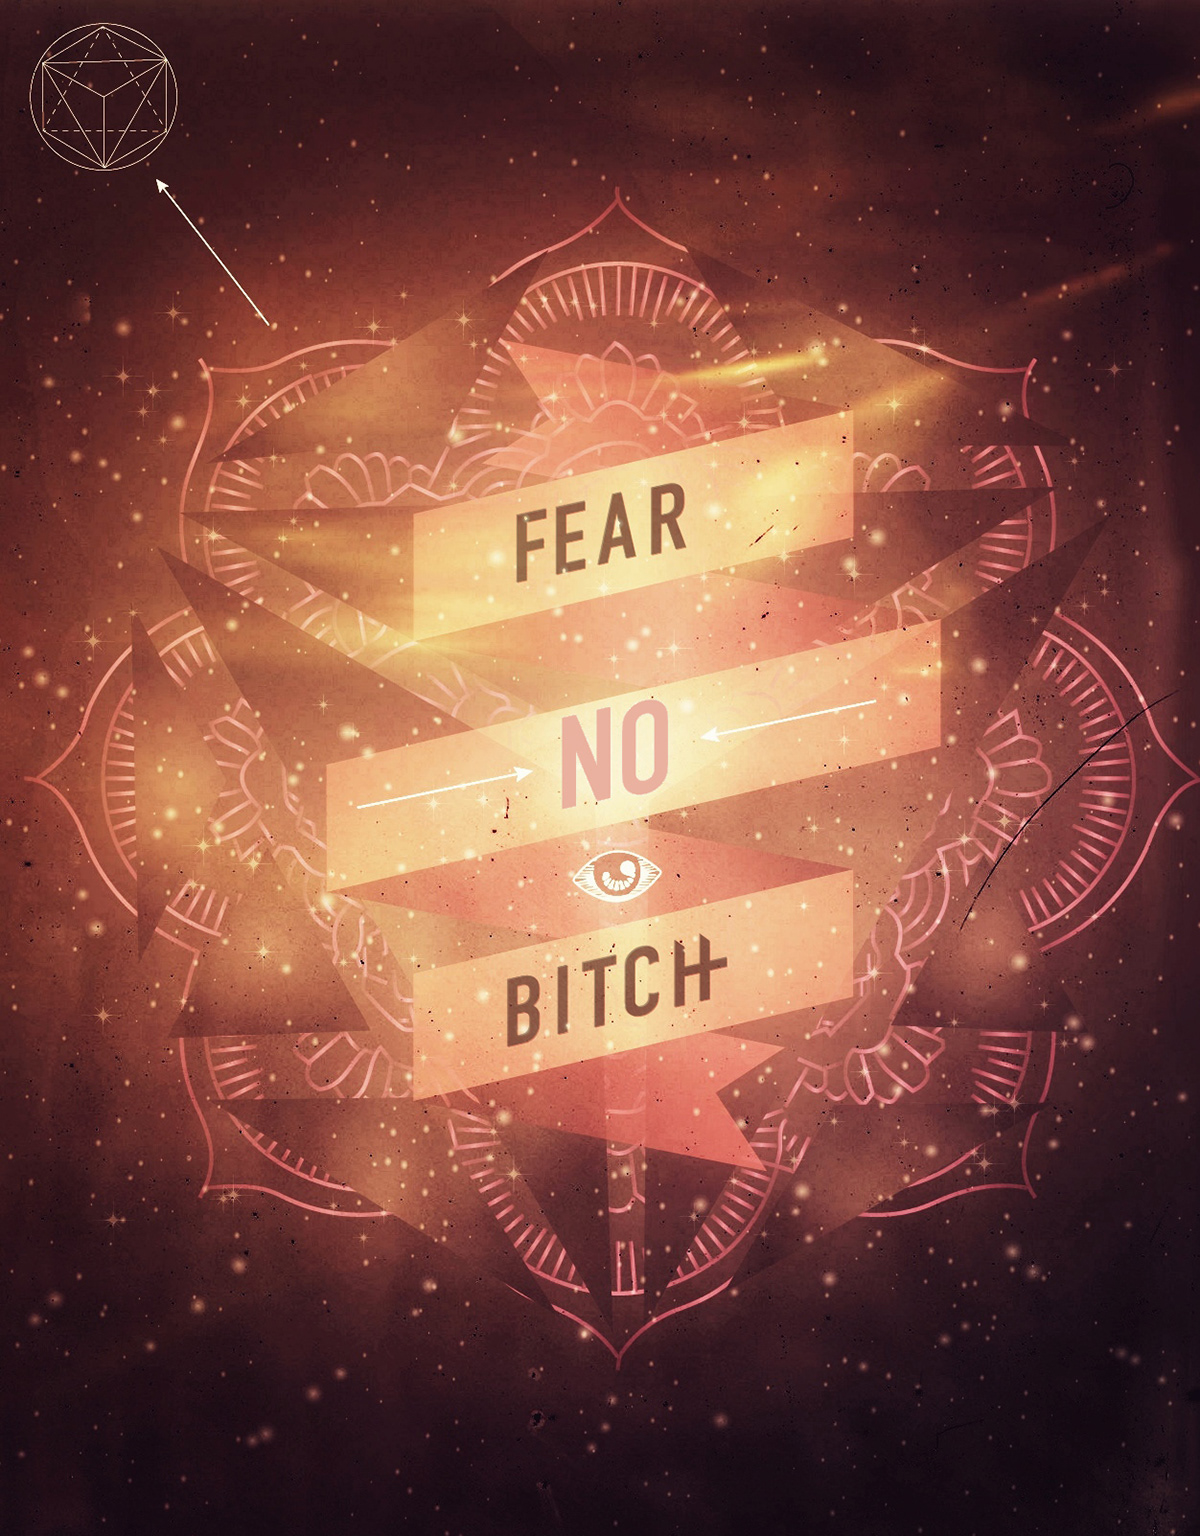 FEAR NO BITCH frases inspiring no fear